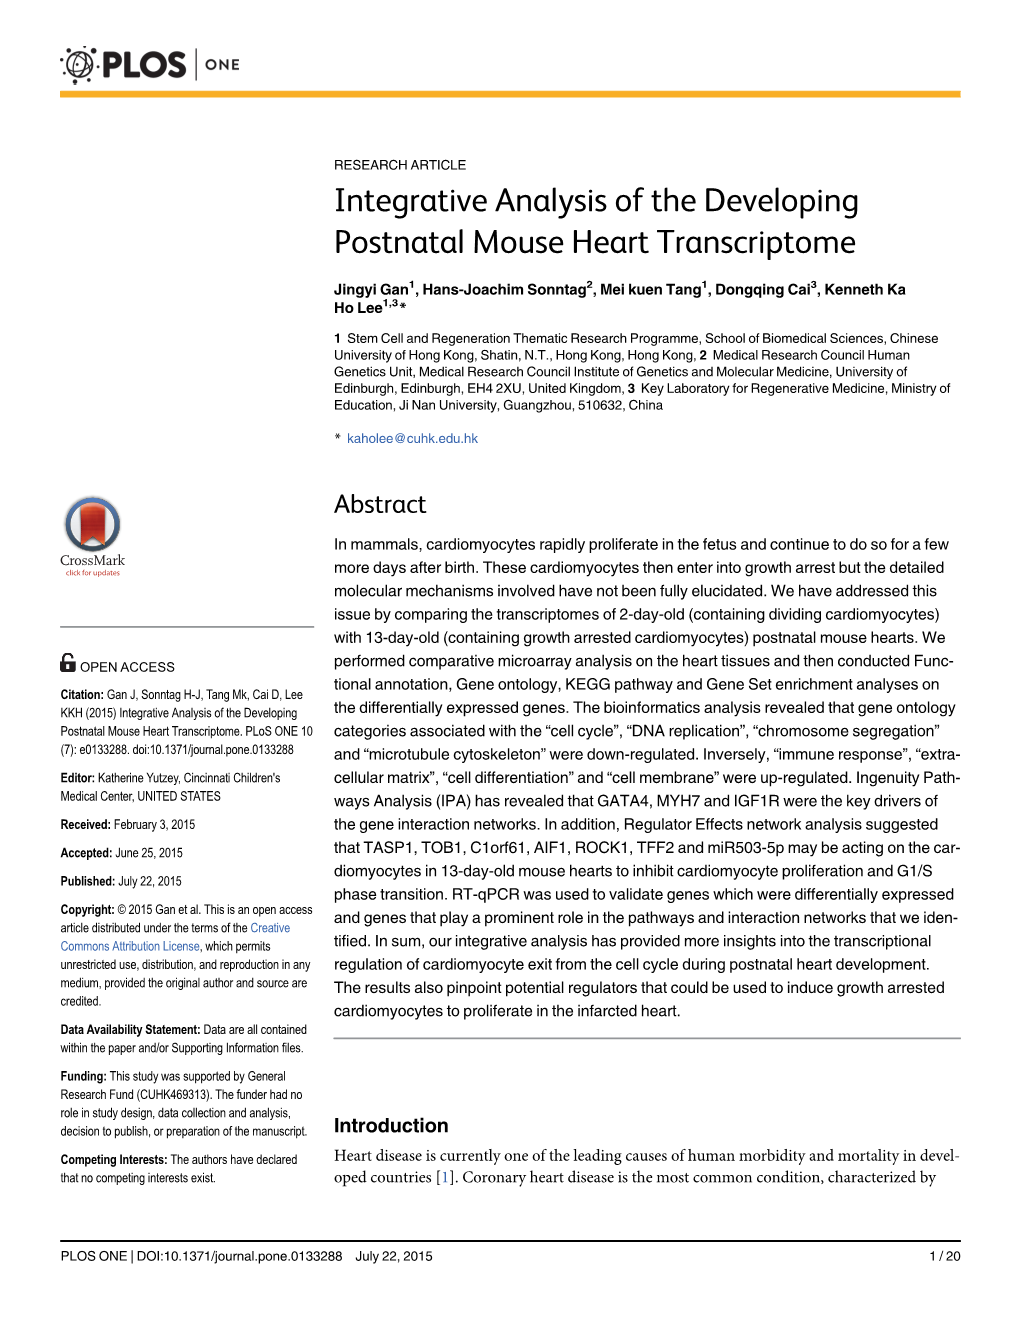 Integrative Analysis of the Developing Postnatal Mouse Heart Transcriptome